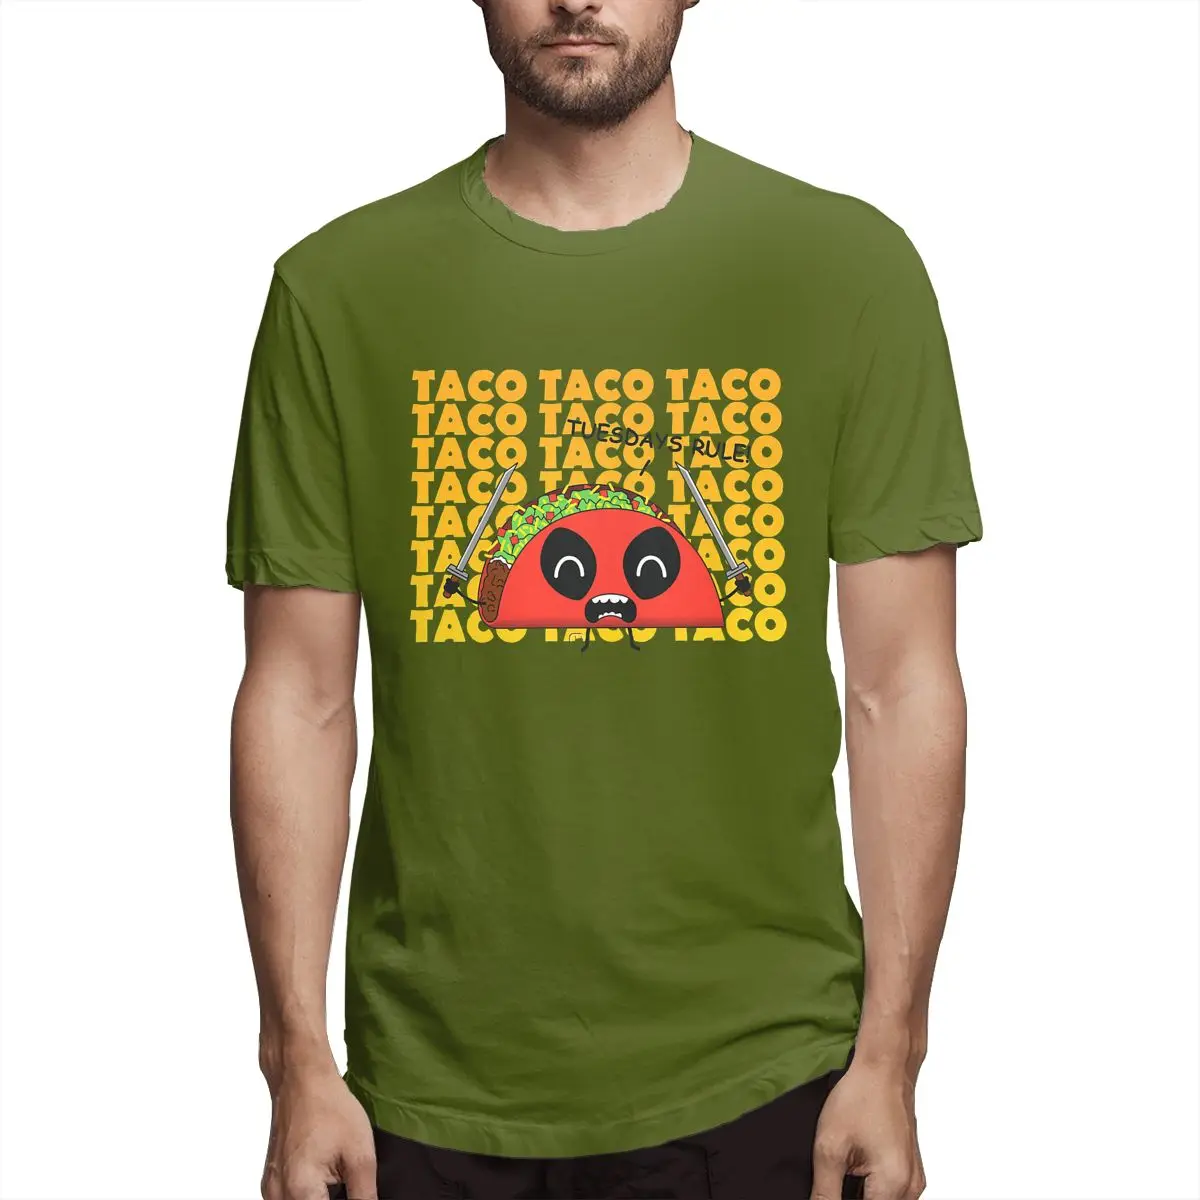 Taco Tuesday Rules Funny Deadpool Men's Leisure Tee Shirt Short Sleeve Crewneck T-Shirt 100% Cotton New Arrival Clothes